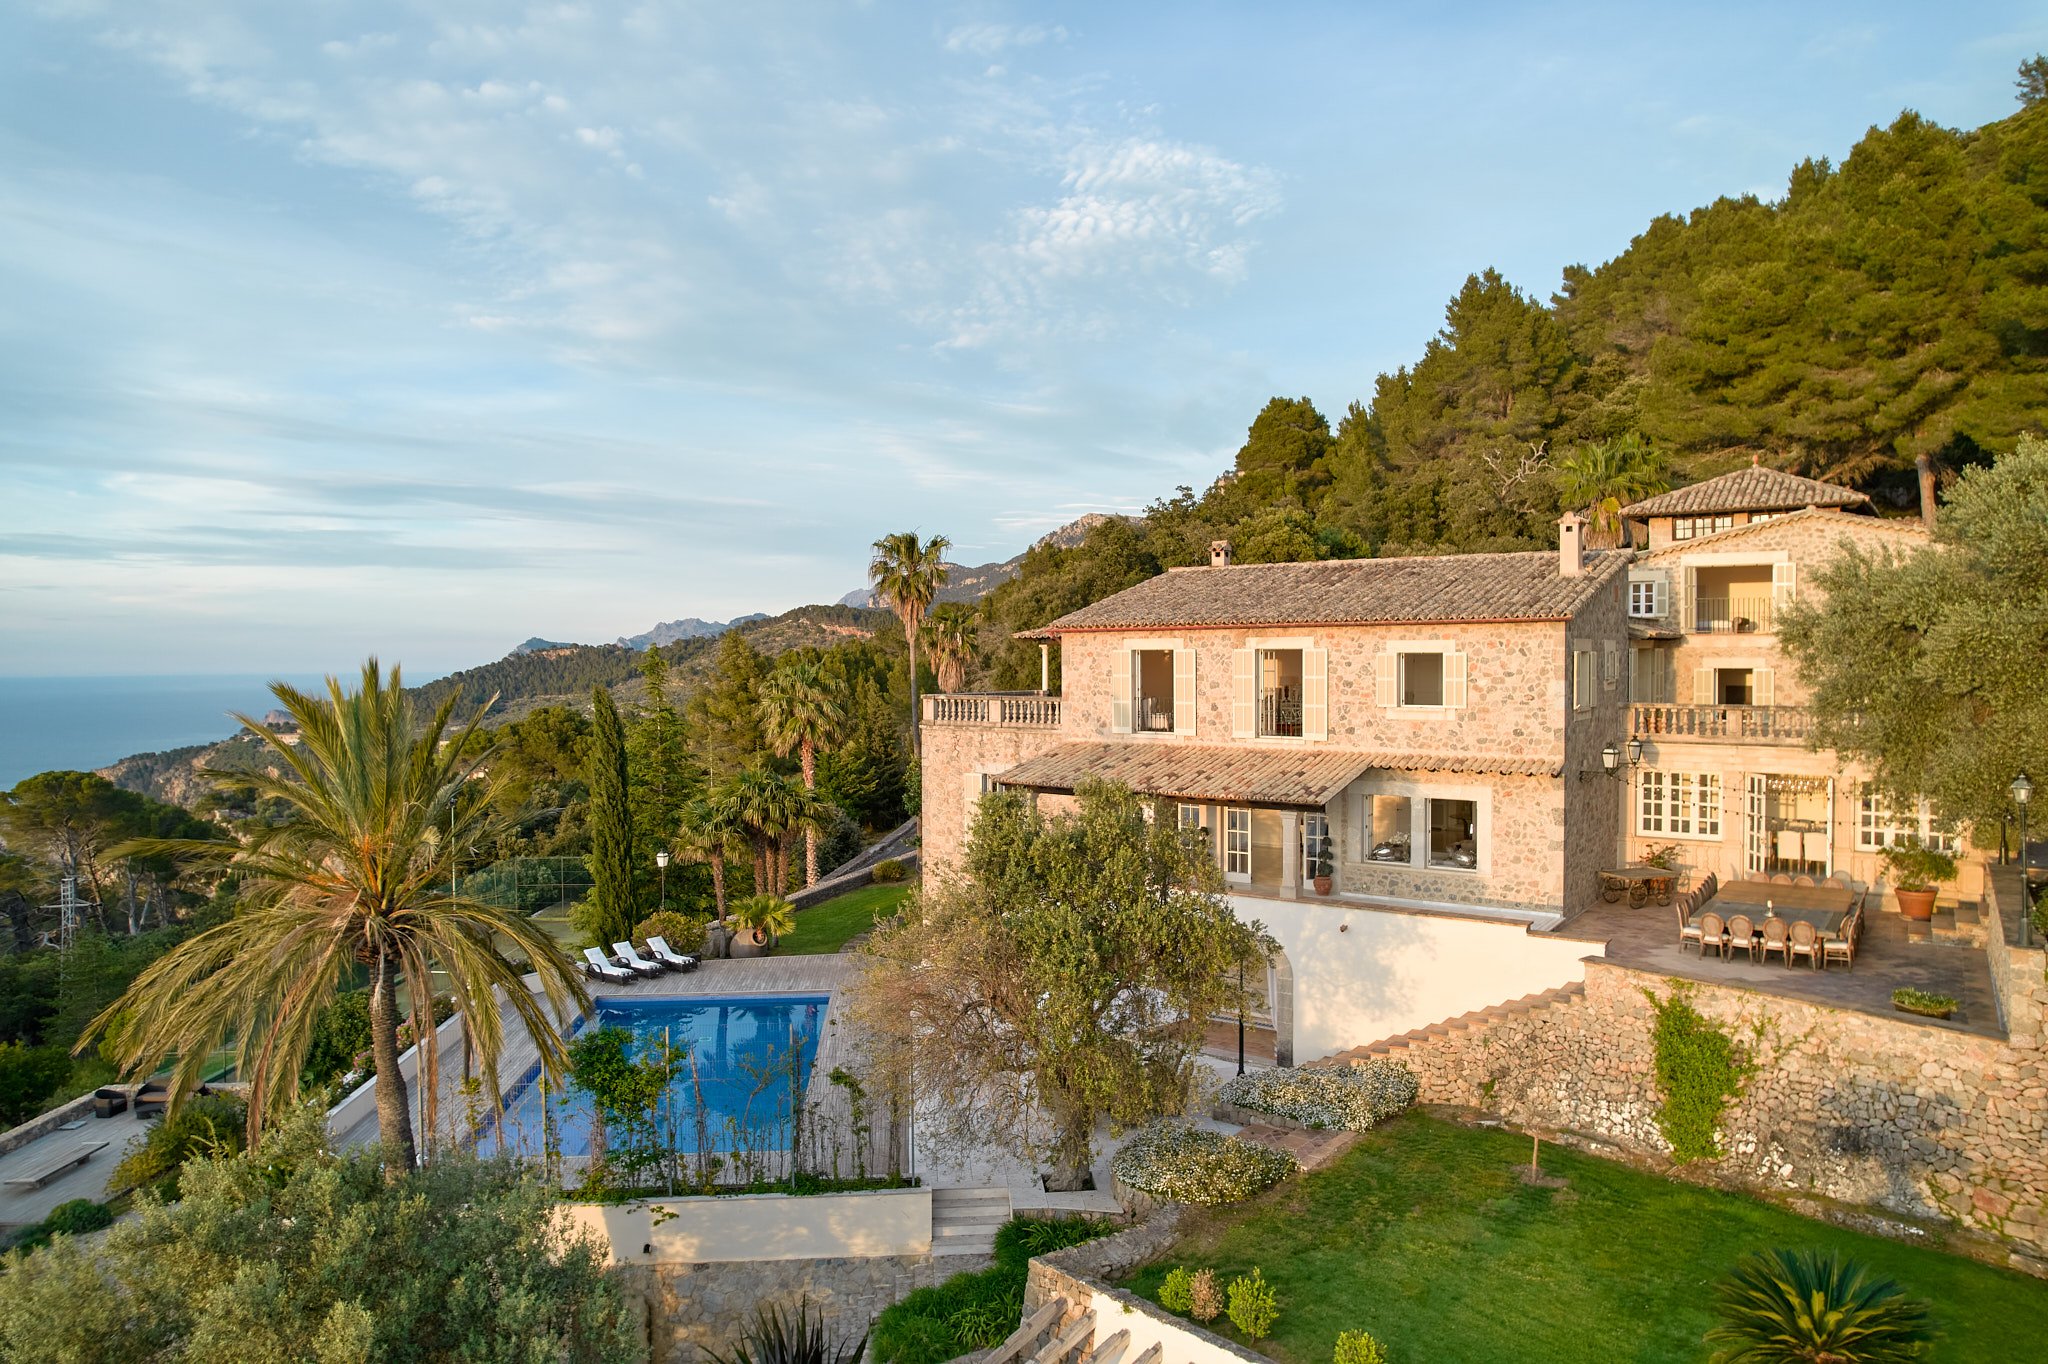 Francis York Can Calo: Historic Estate in Mallorca Built by Archduke Luis Salvador of Habsburg 86.jpg